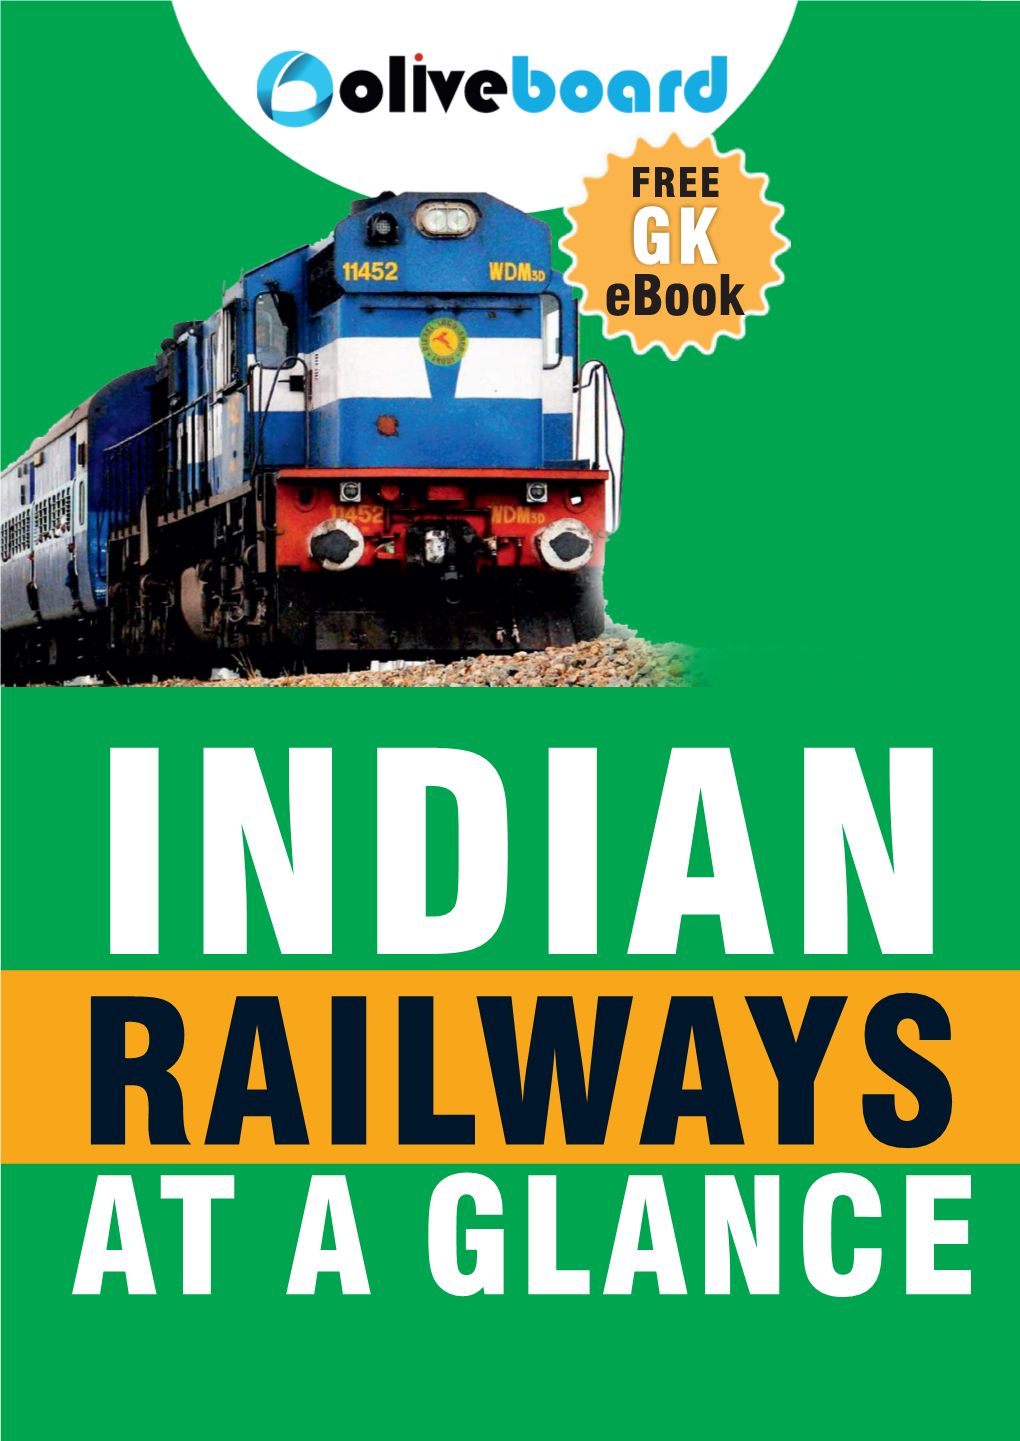 Division of Indian Railways